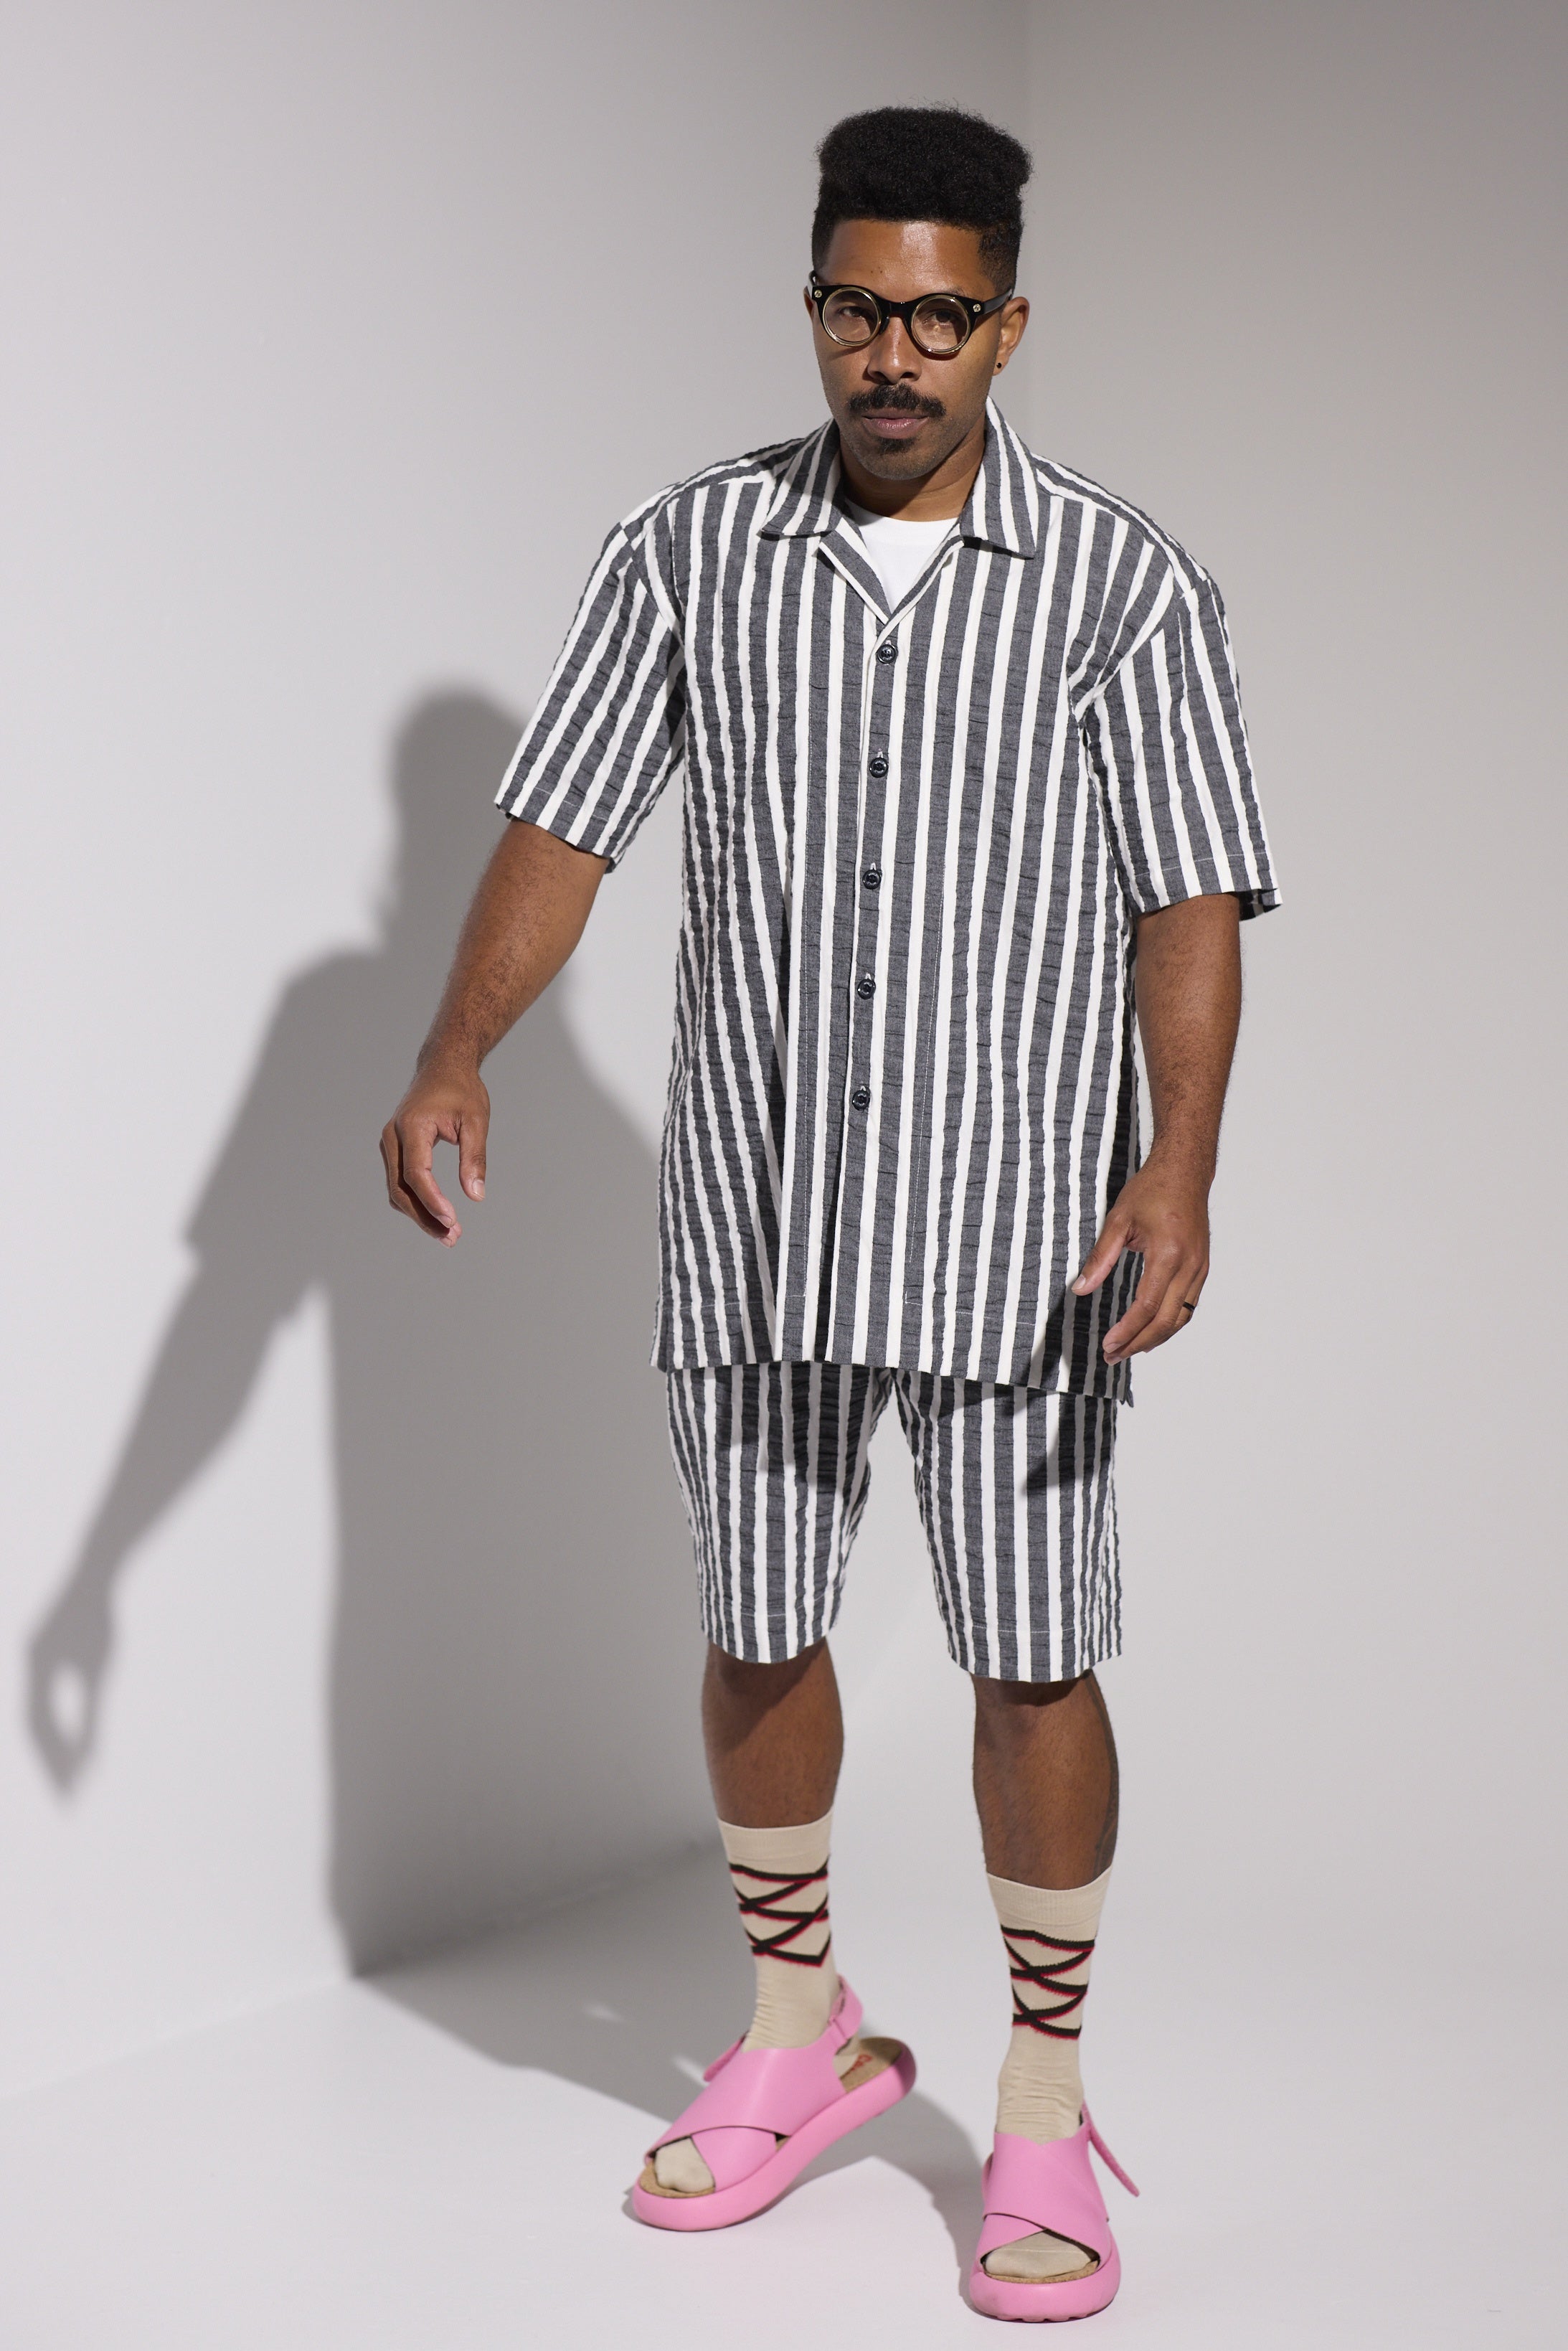 WORLDman 5151B Quincy S/S Bowling Shirt Seersucker Stripe Black & White